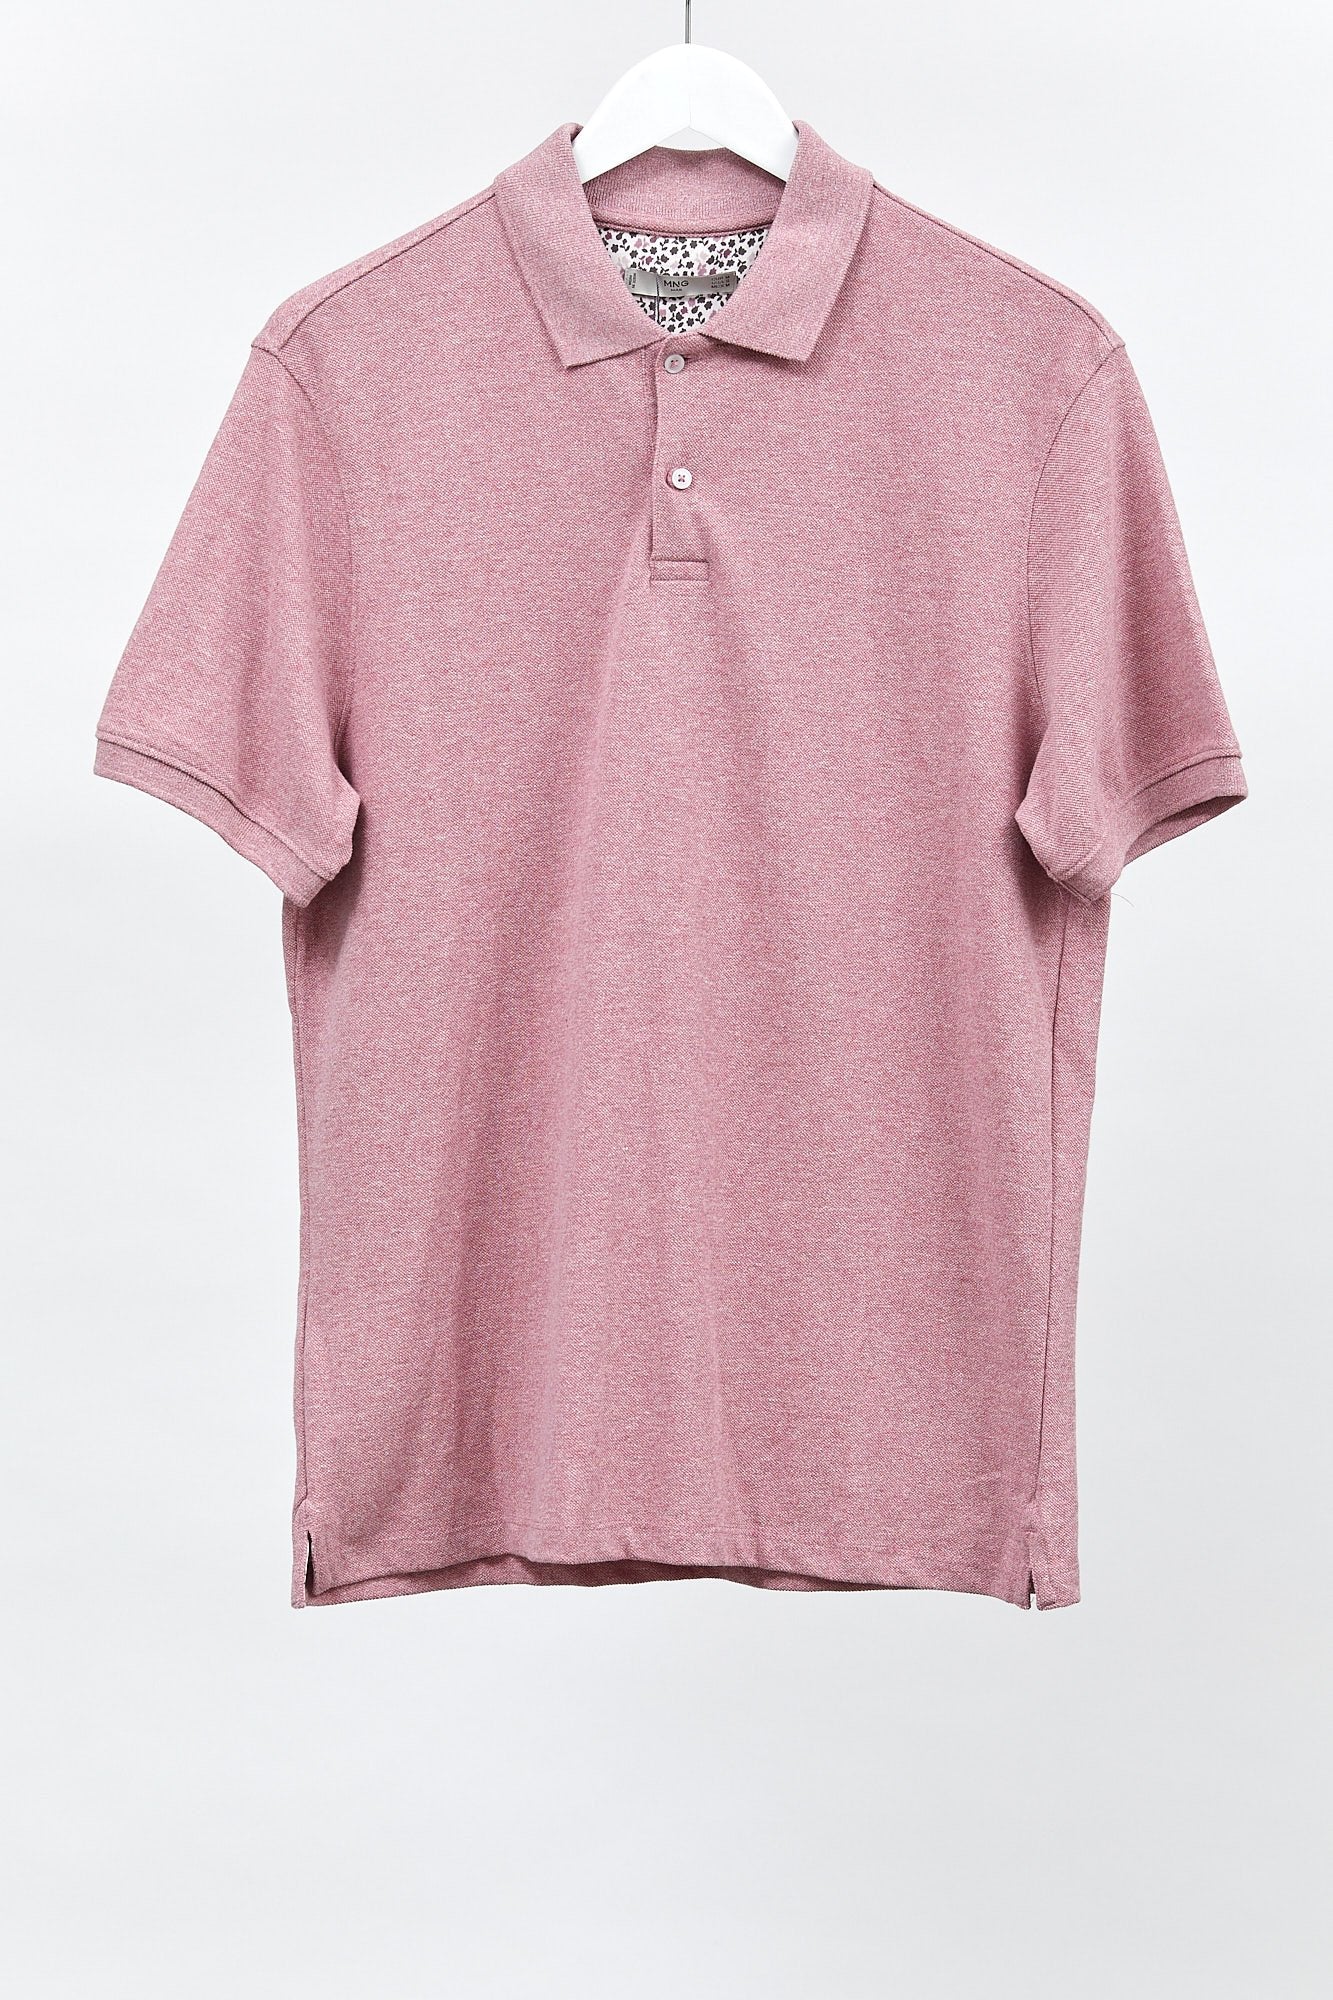 Mens Mango Pink Polo shirt: Size Medium